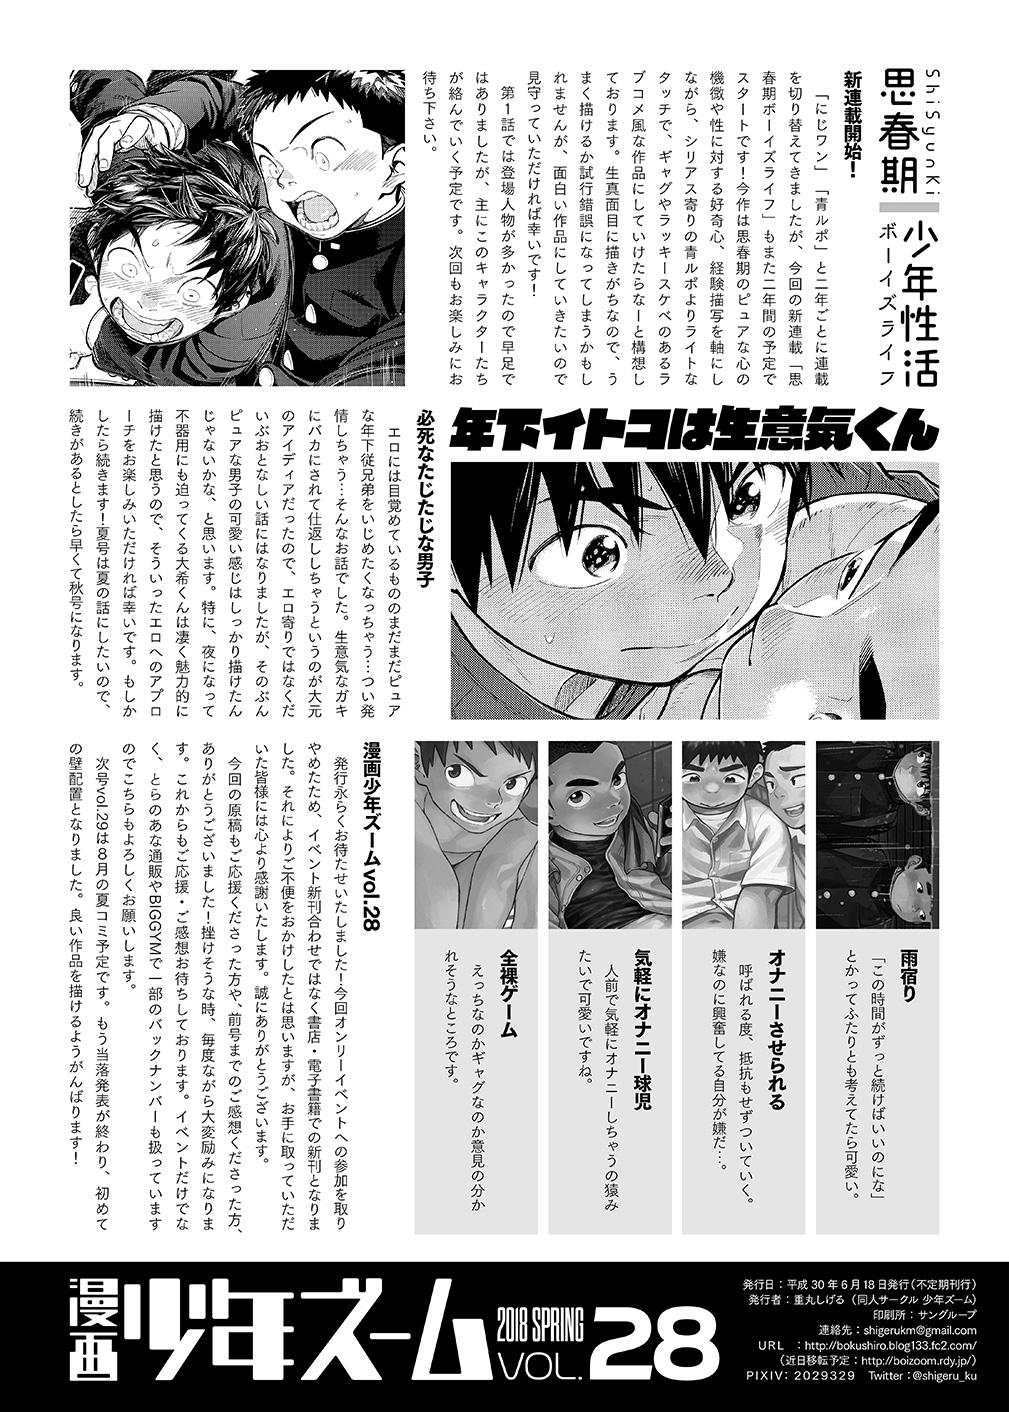 Manga Shounen Zoom Vol. 28 49